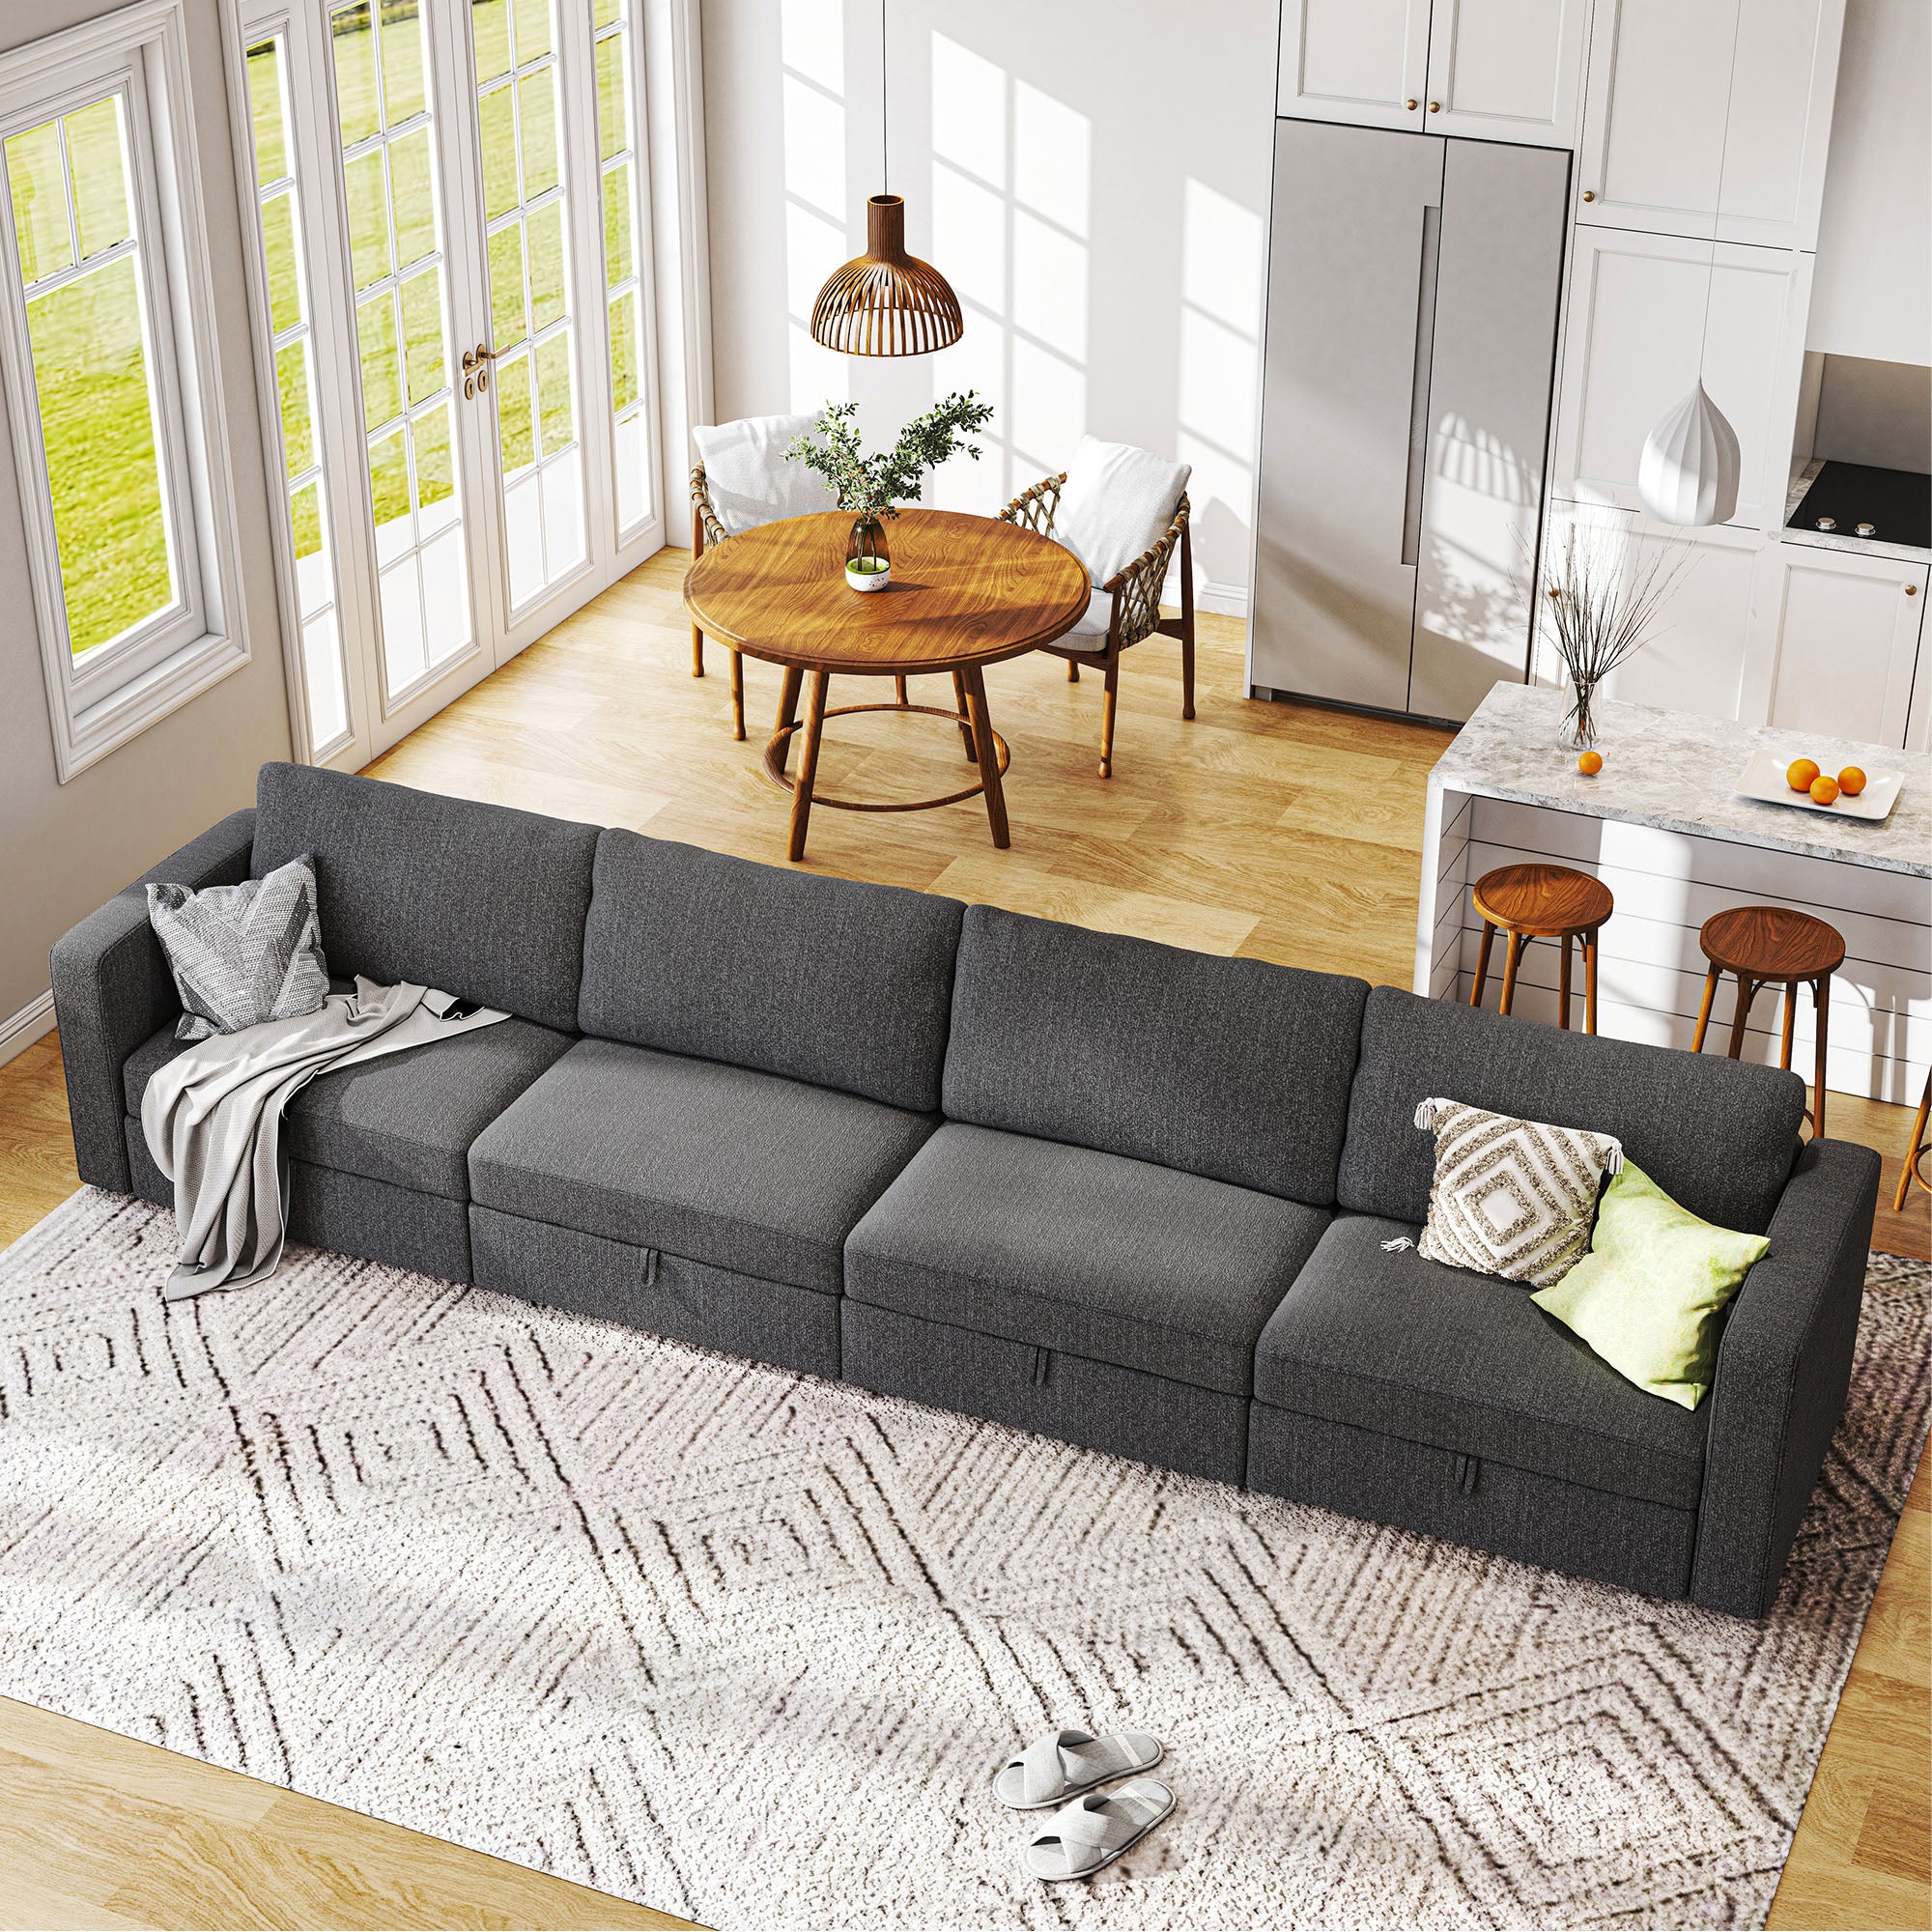 HONBAY Fabric Dark Grey 4 Seaters Spacious Modular Sectional Sofa for Living Room